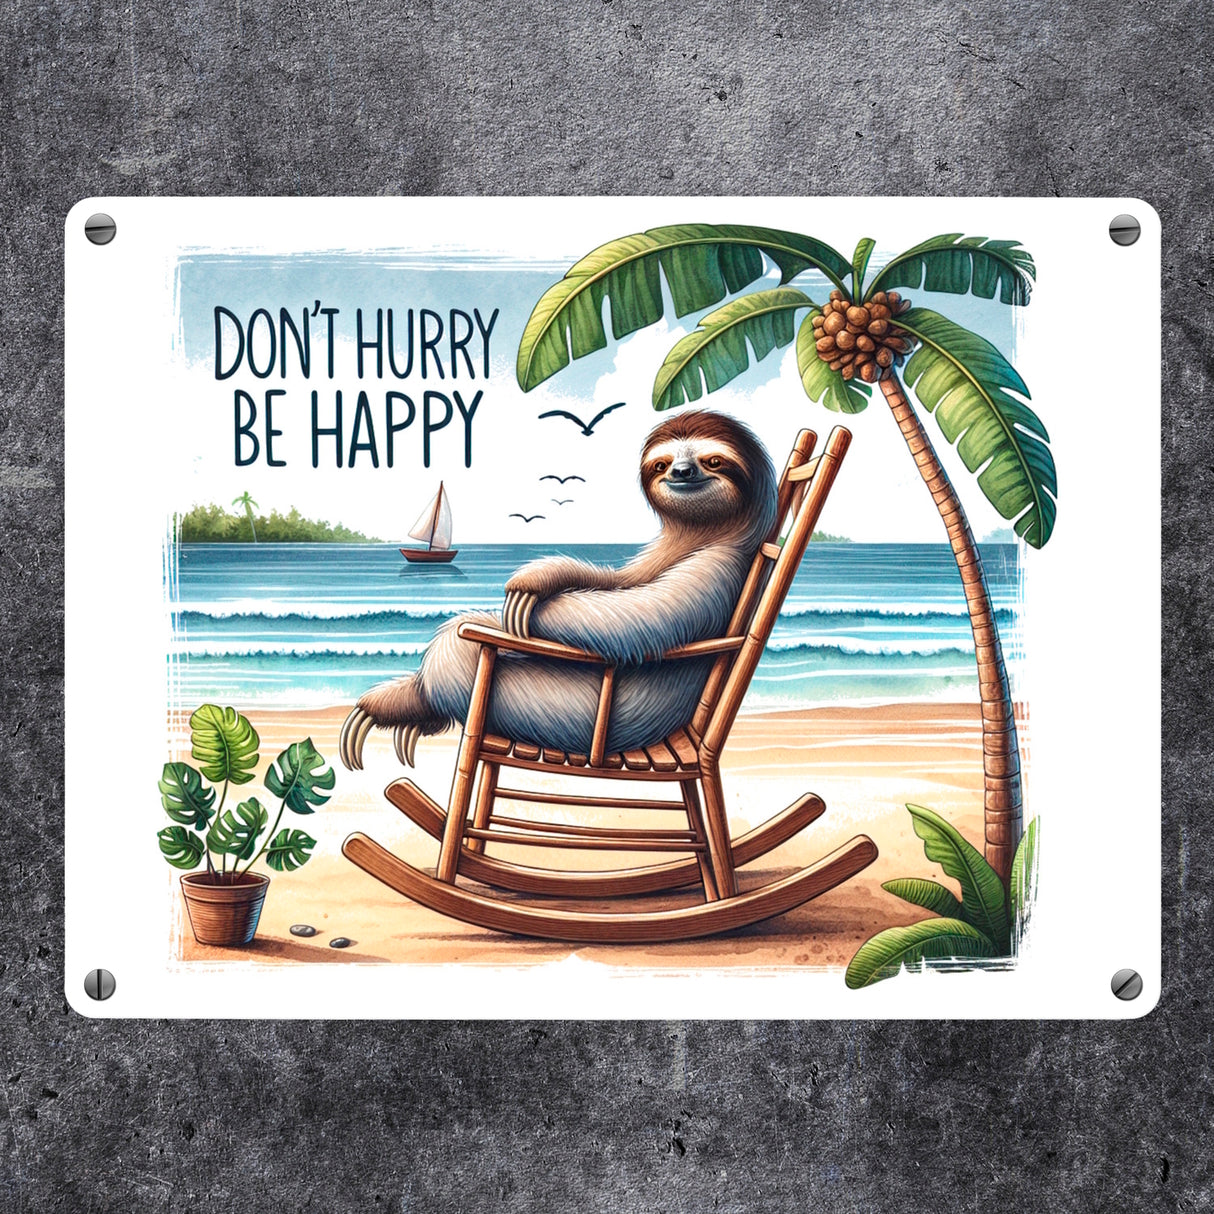 Faultier am Strand Metallschild in 15x20 cm mit Spruch Don't hurry - be happy